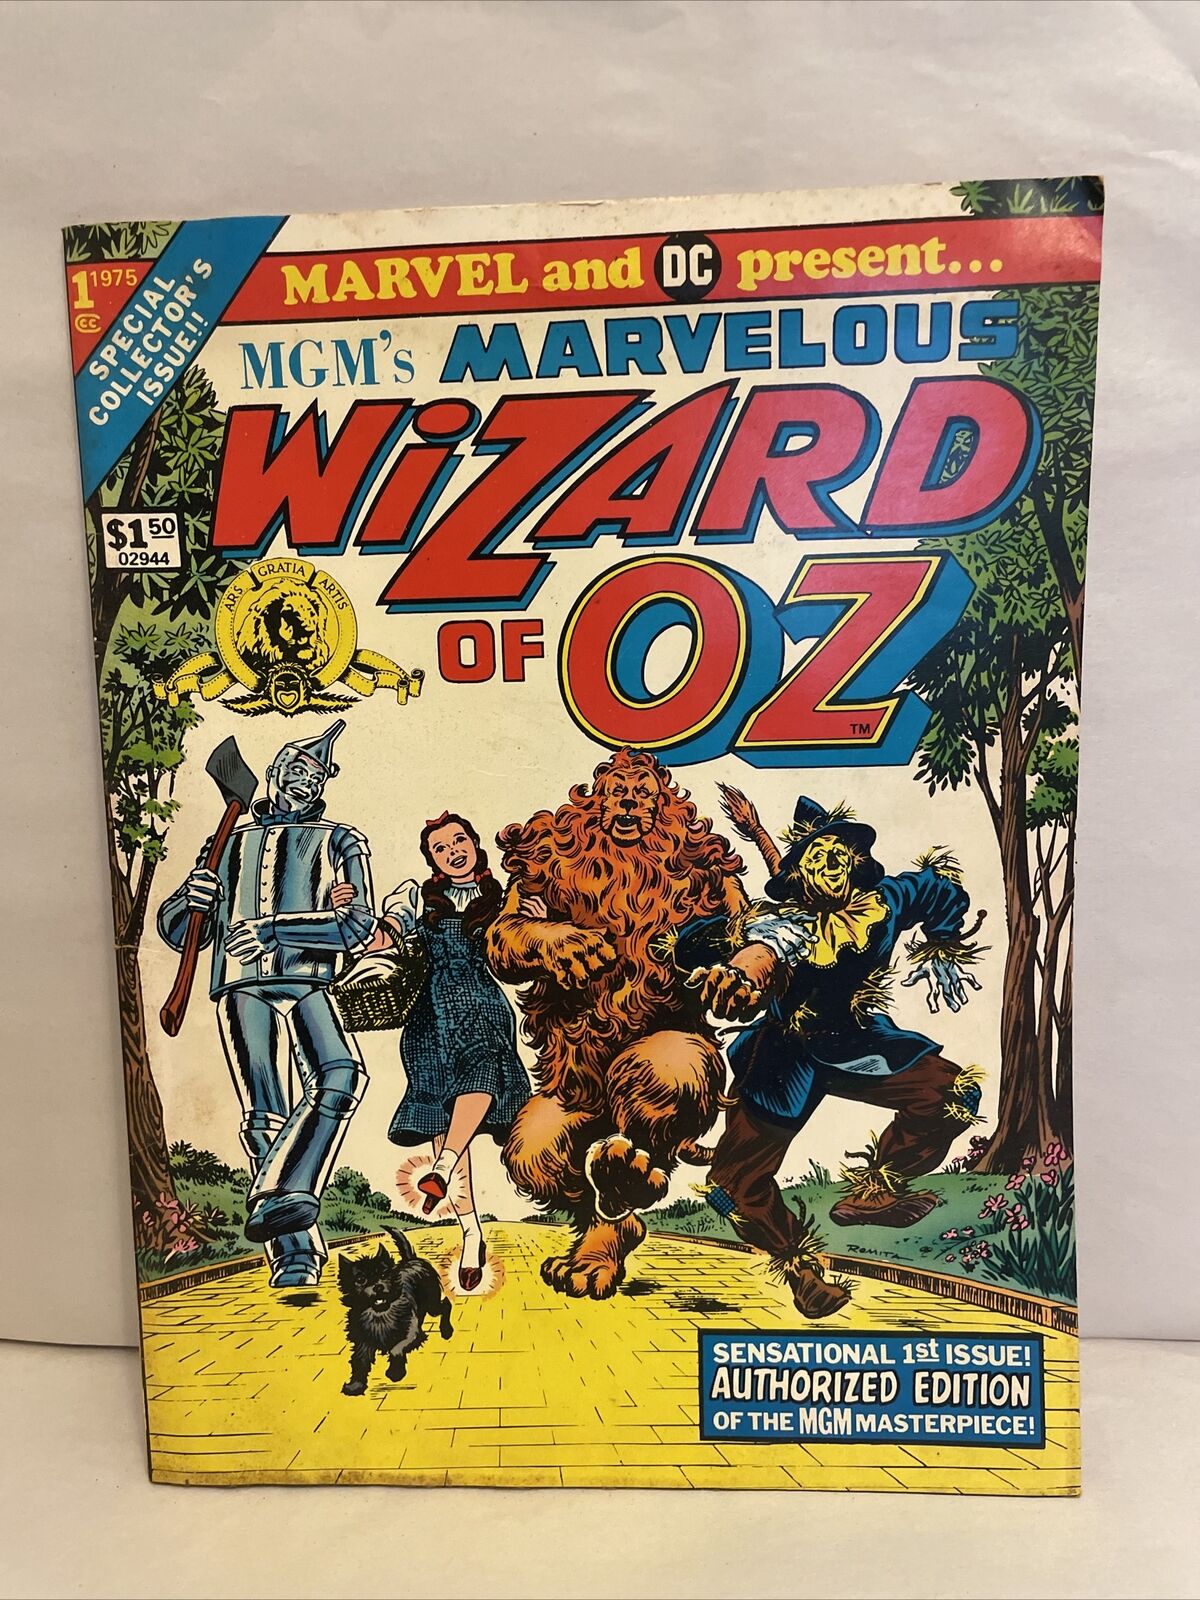 DC & Marvel MGM's Marvelous Wizard of Oz Vol. 1 & Land Of Oz Vol.1, Comics